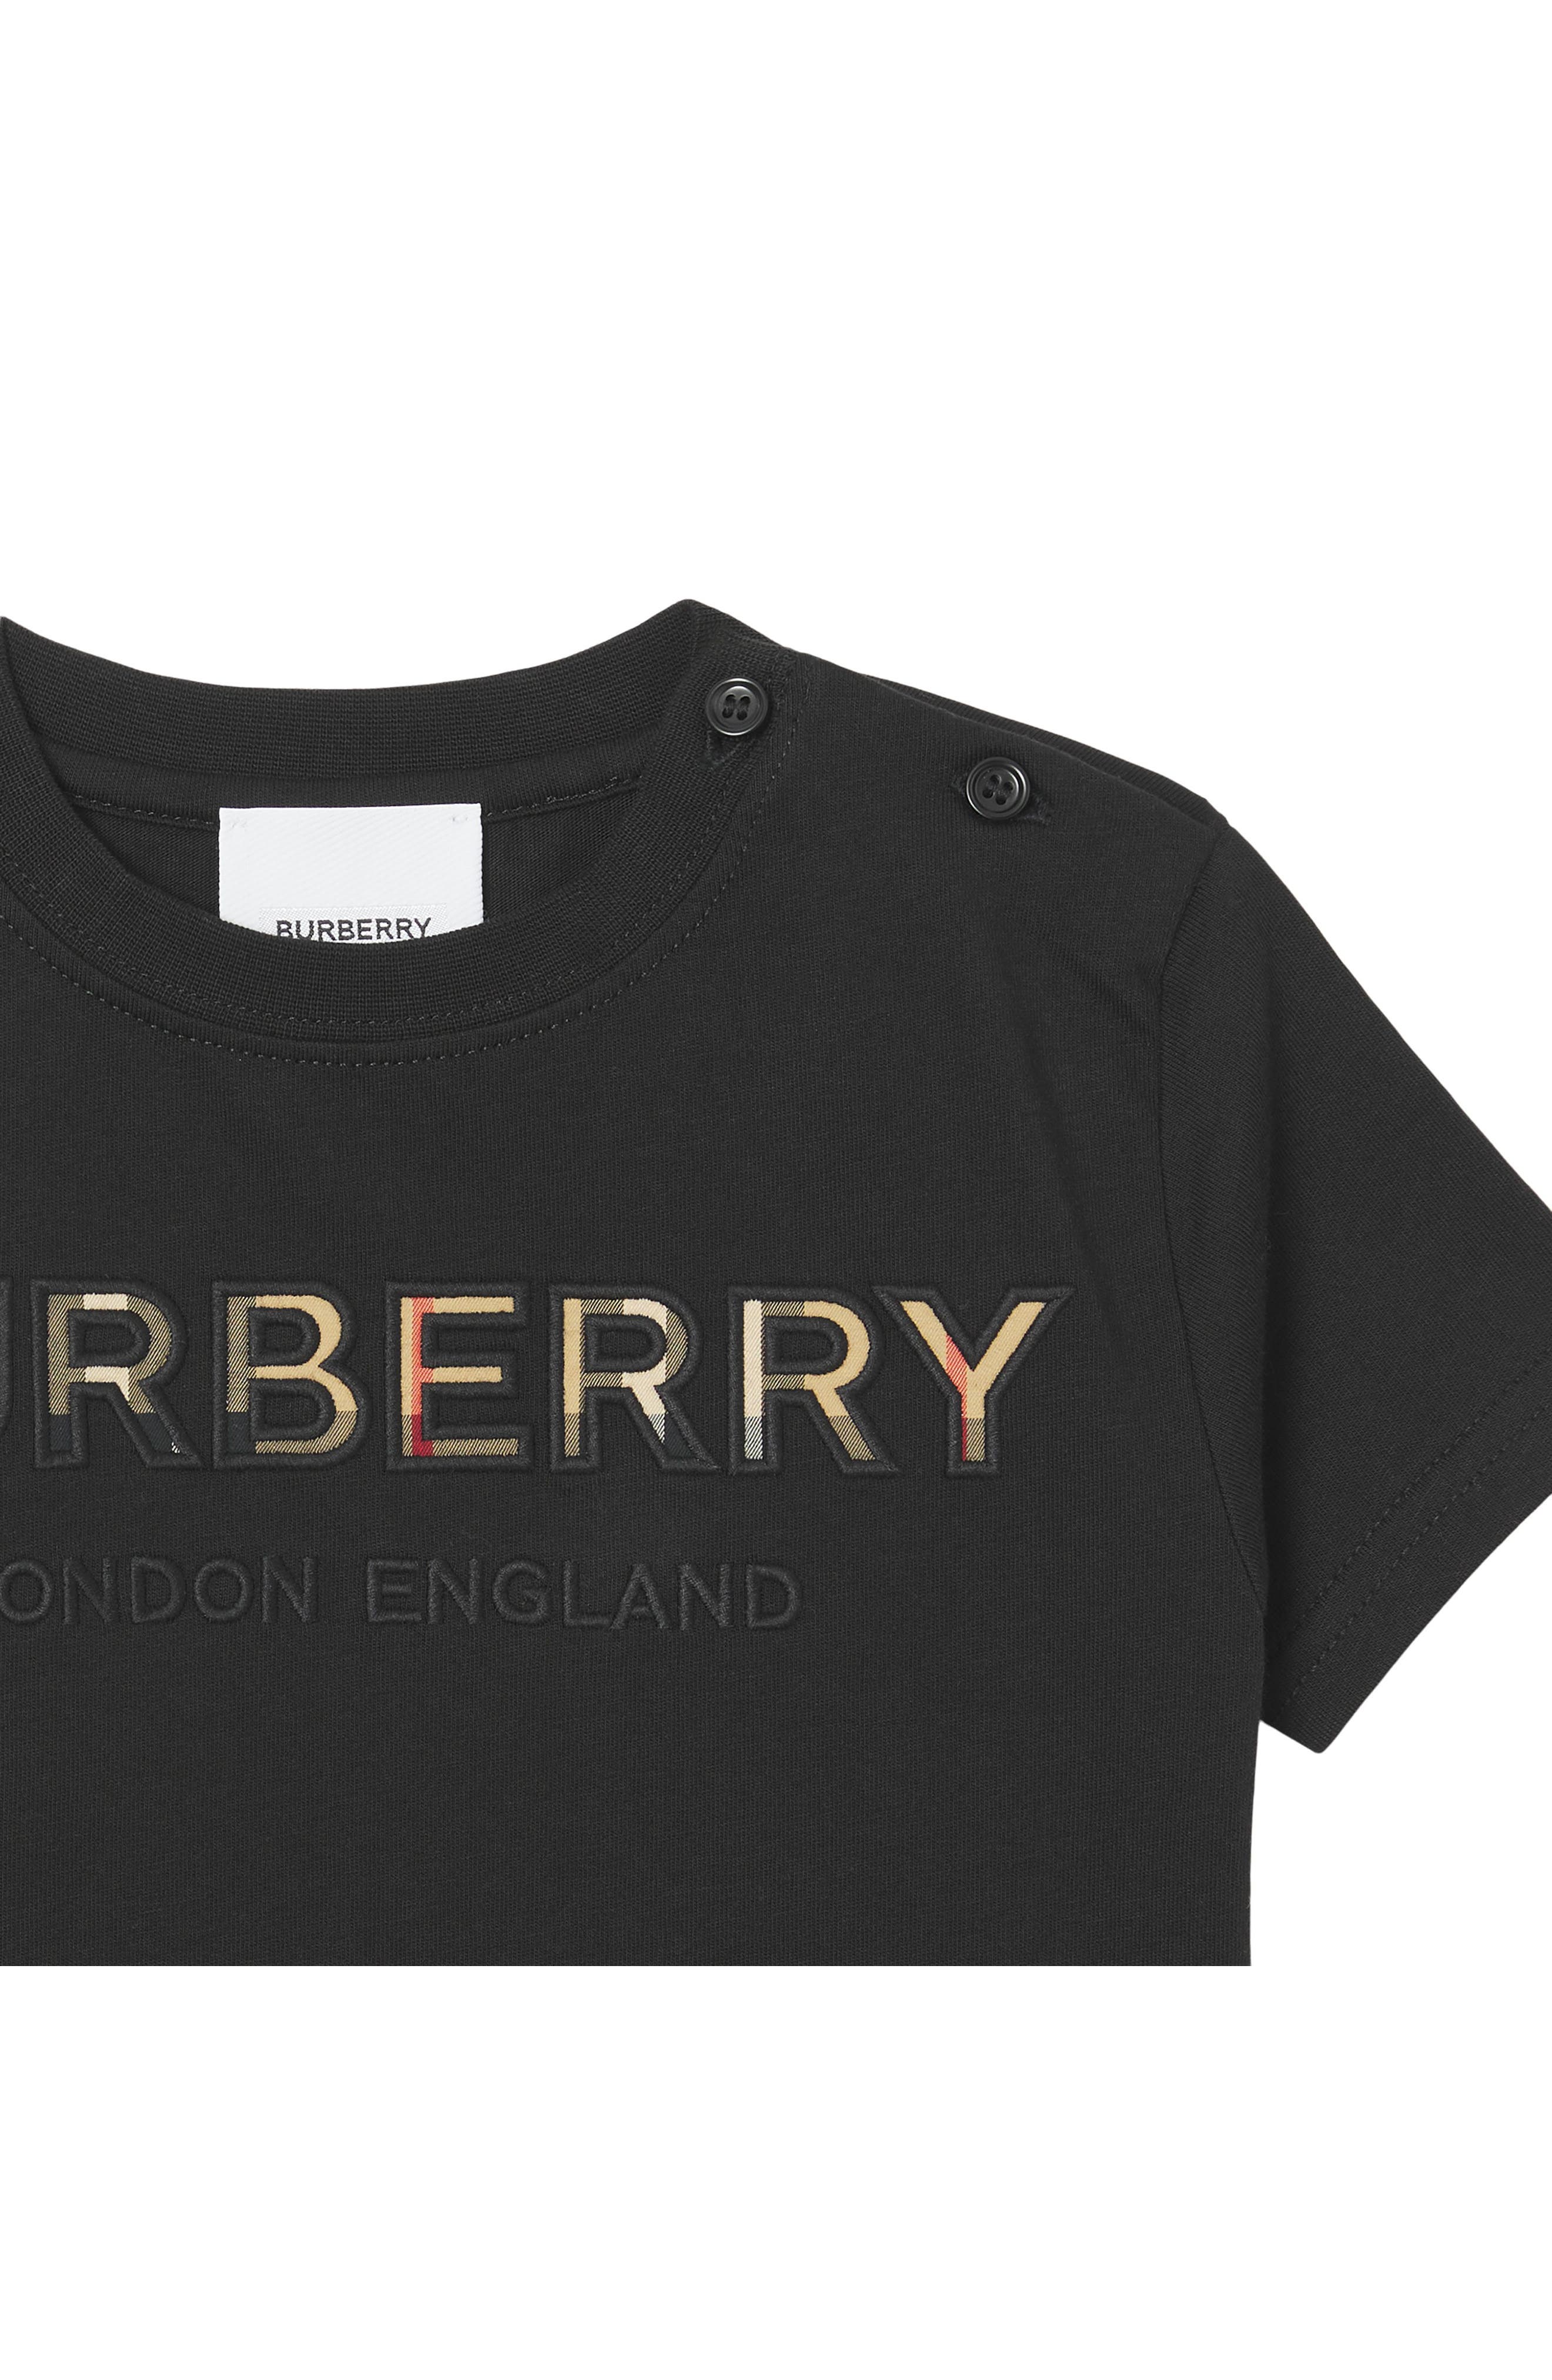 Kids Children's London England 100% Cotton T-Shirt 1-10 Years 